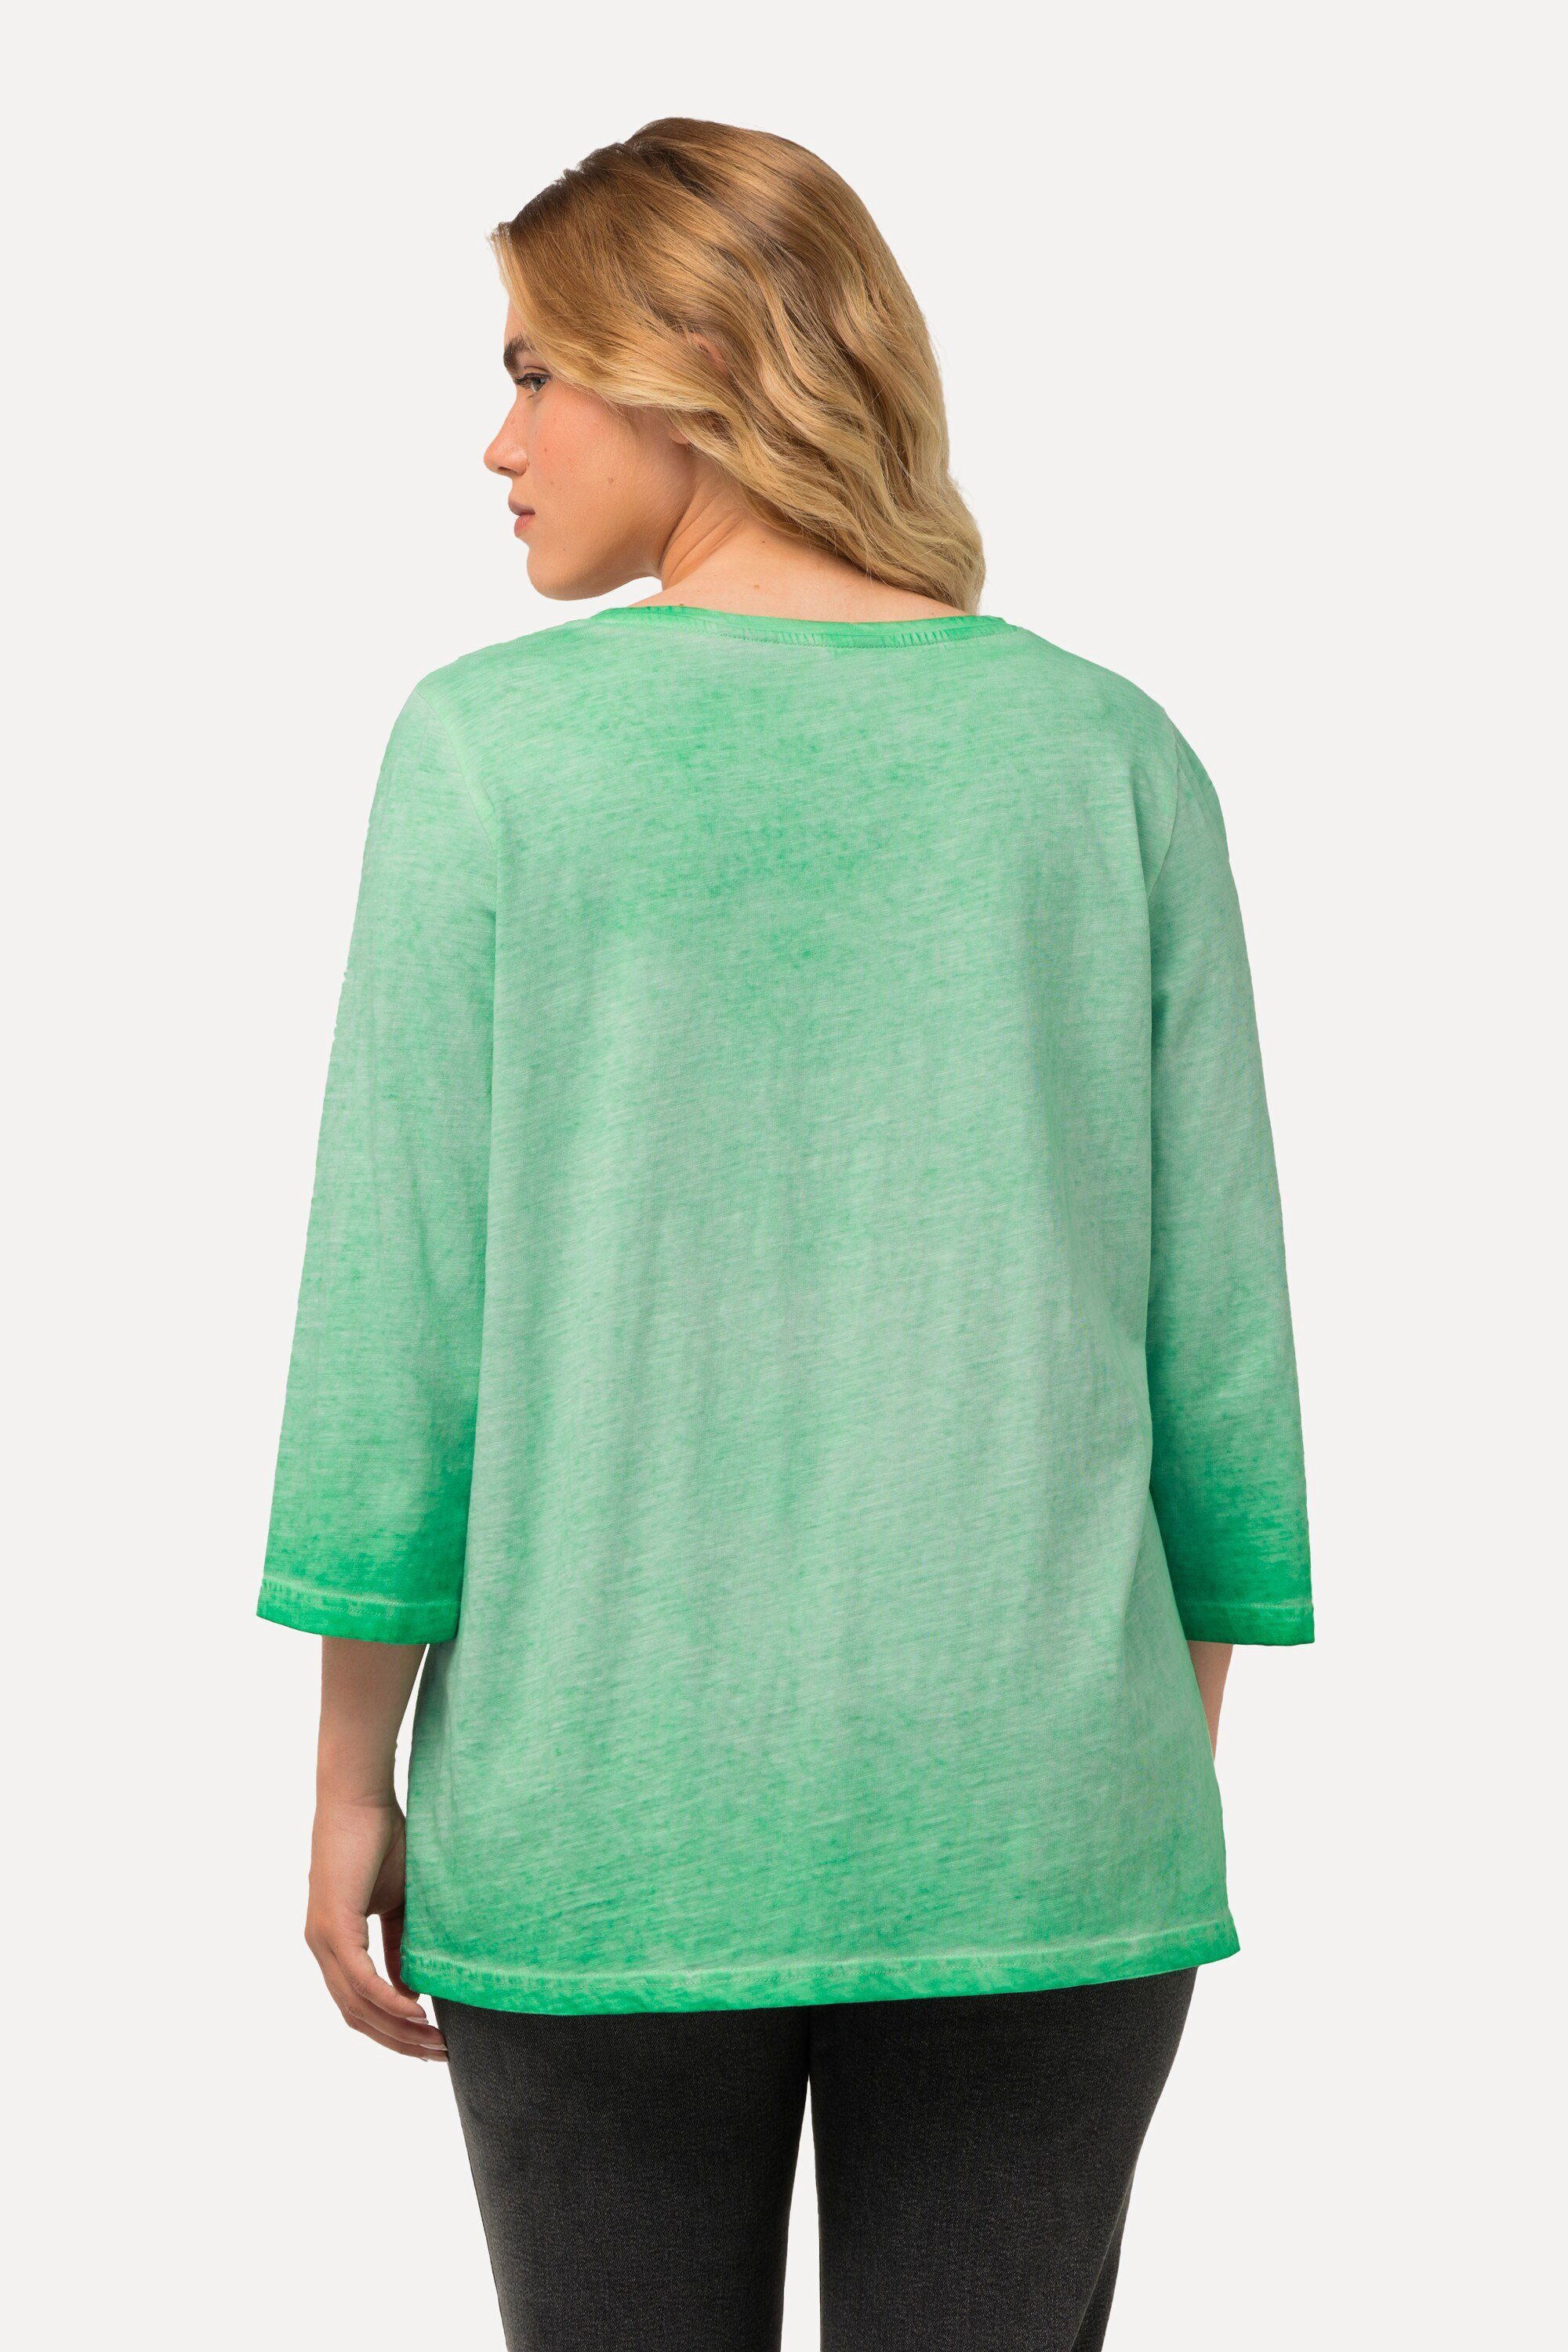 3/4-Arm Ulla blaugrün Grußmotiv Cold Dyed Rundhalsshirt Popken V-Ausschnitt Shirt